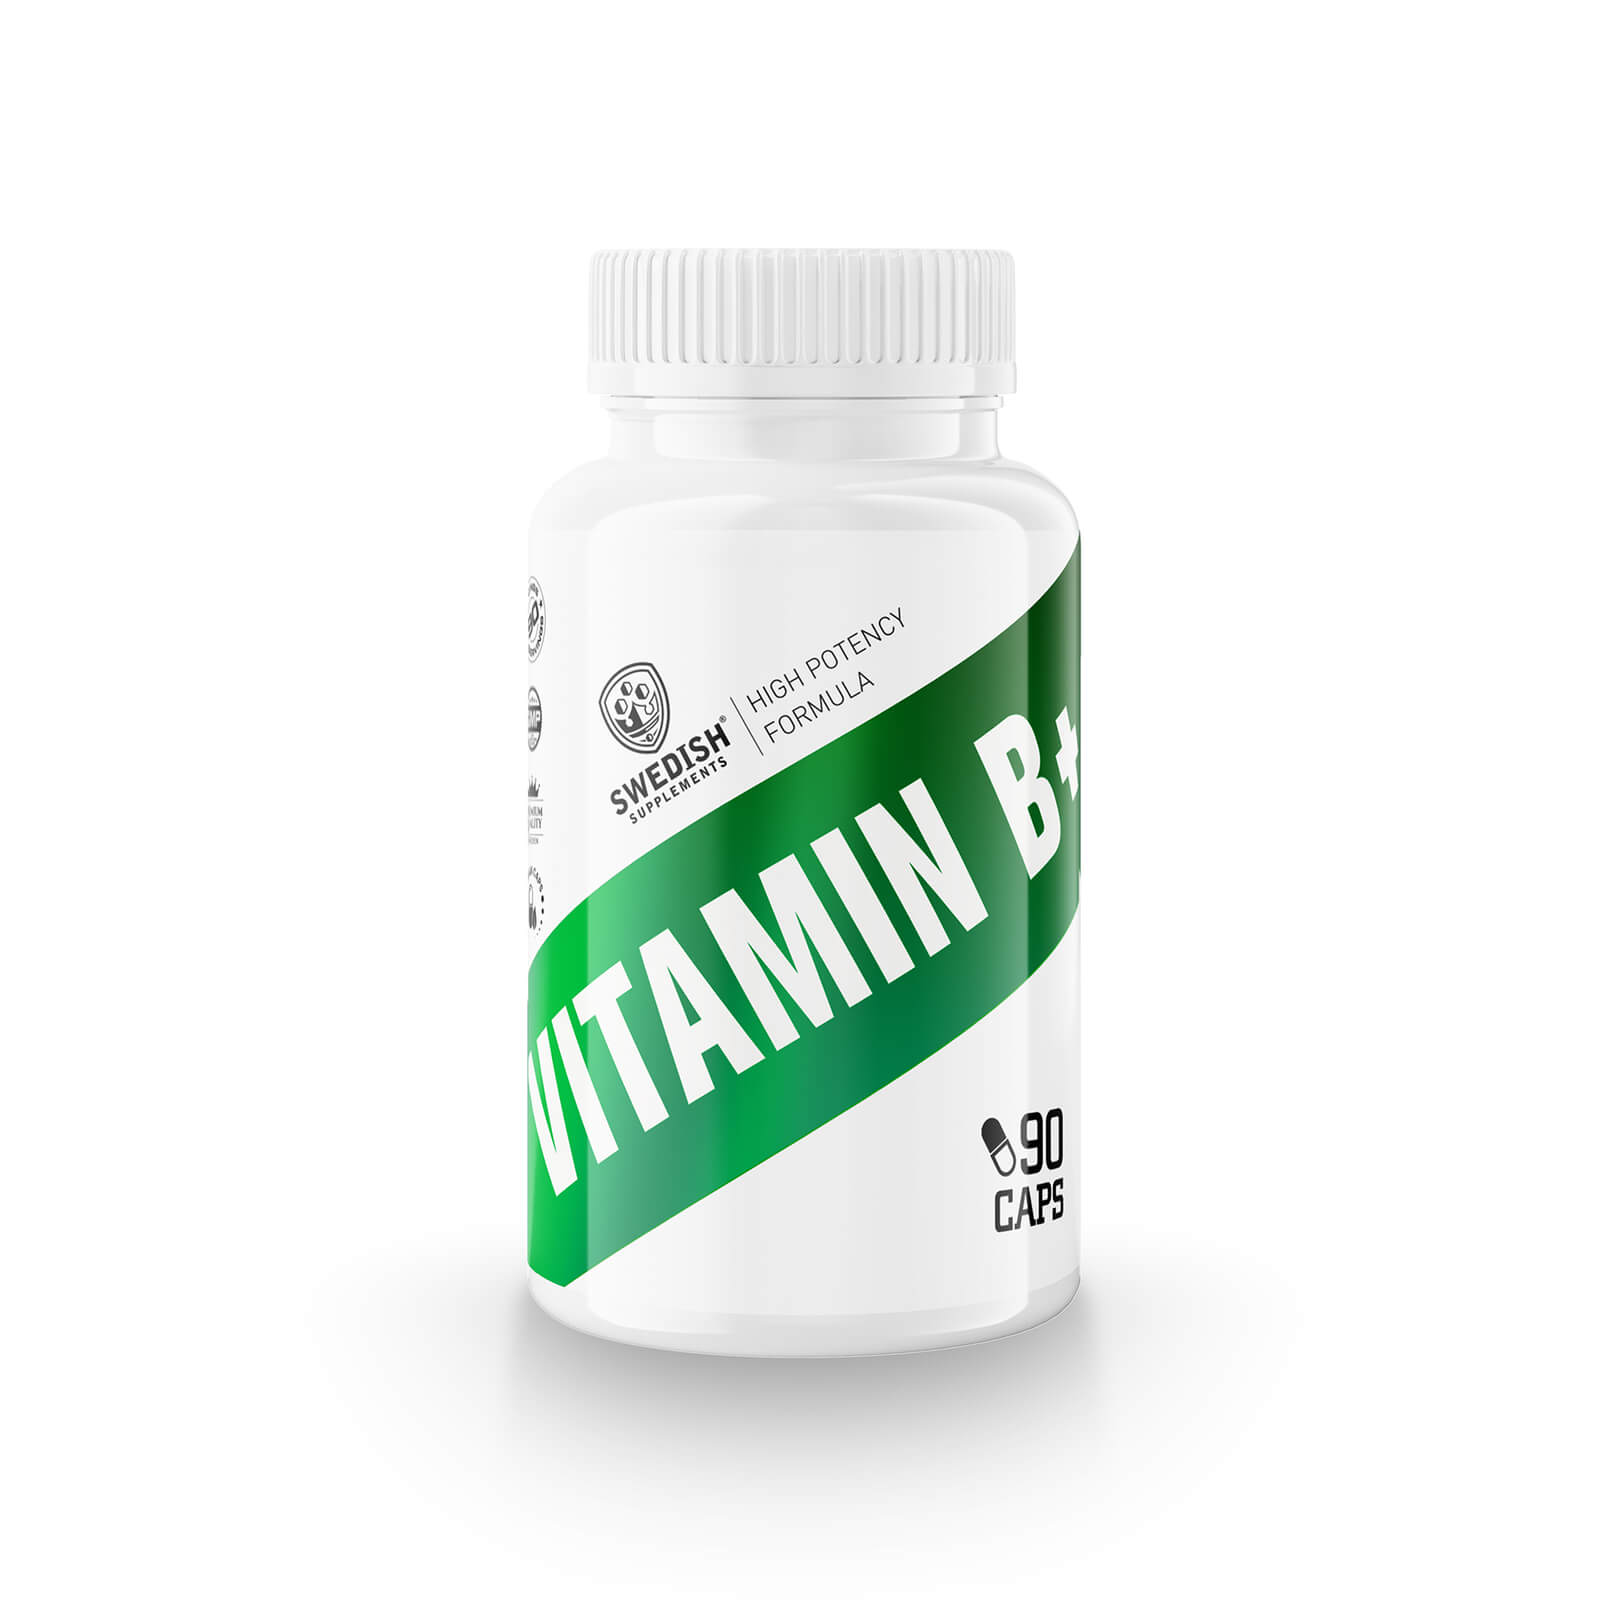 Kolla Vitamin B+, 90 kapslar, Swedish Supplements hos SportGymButiken.se